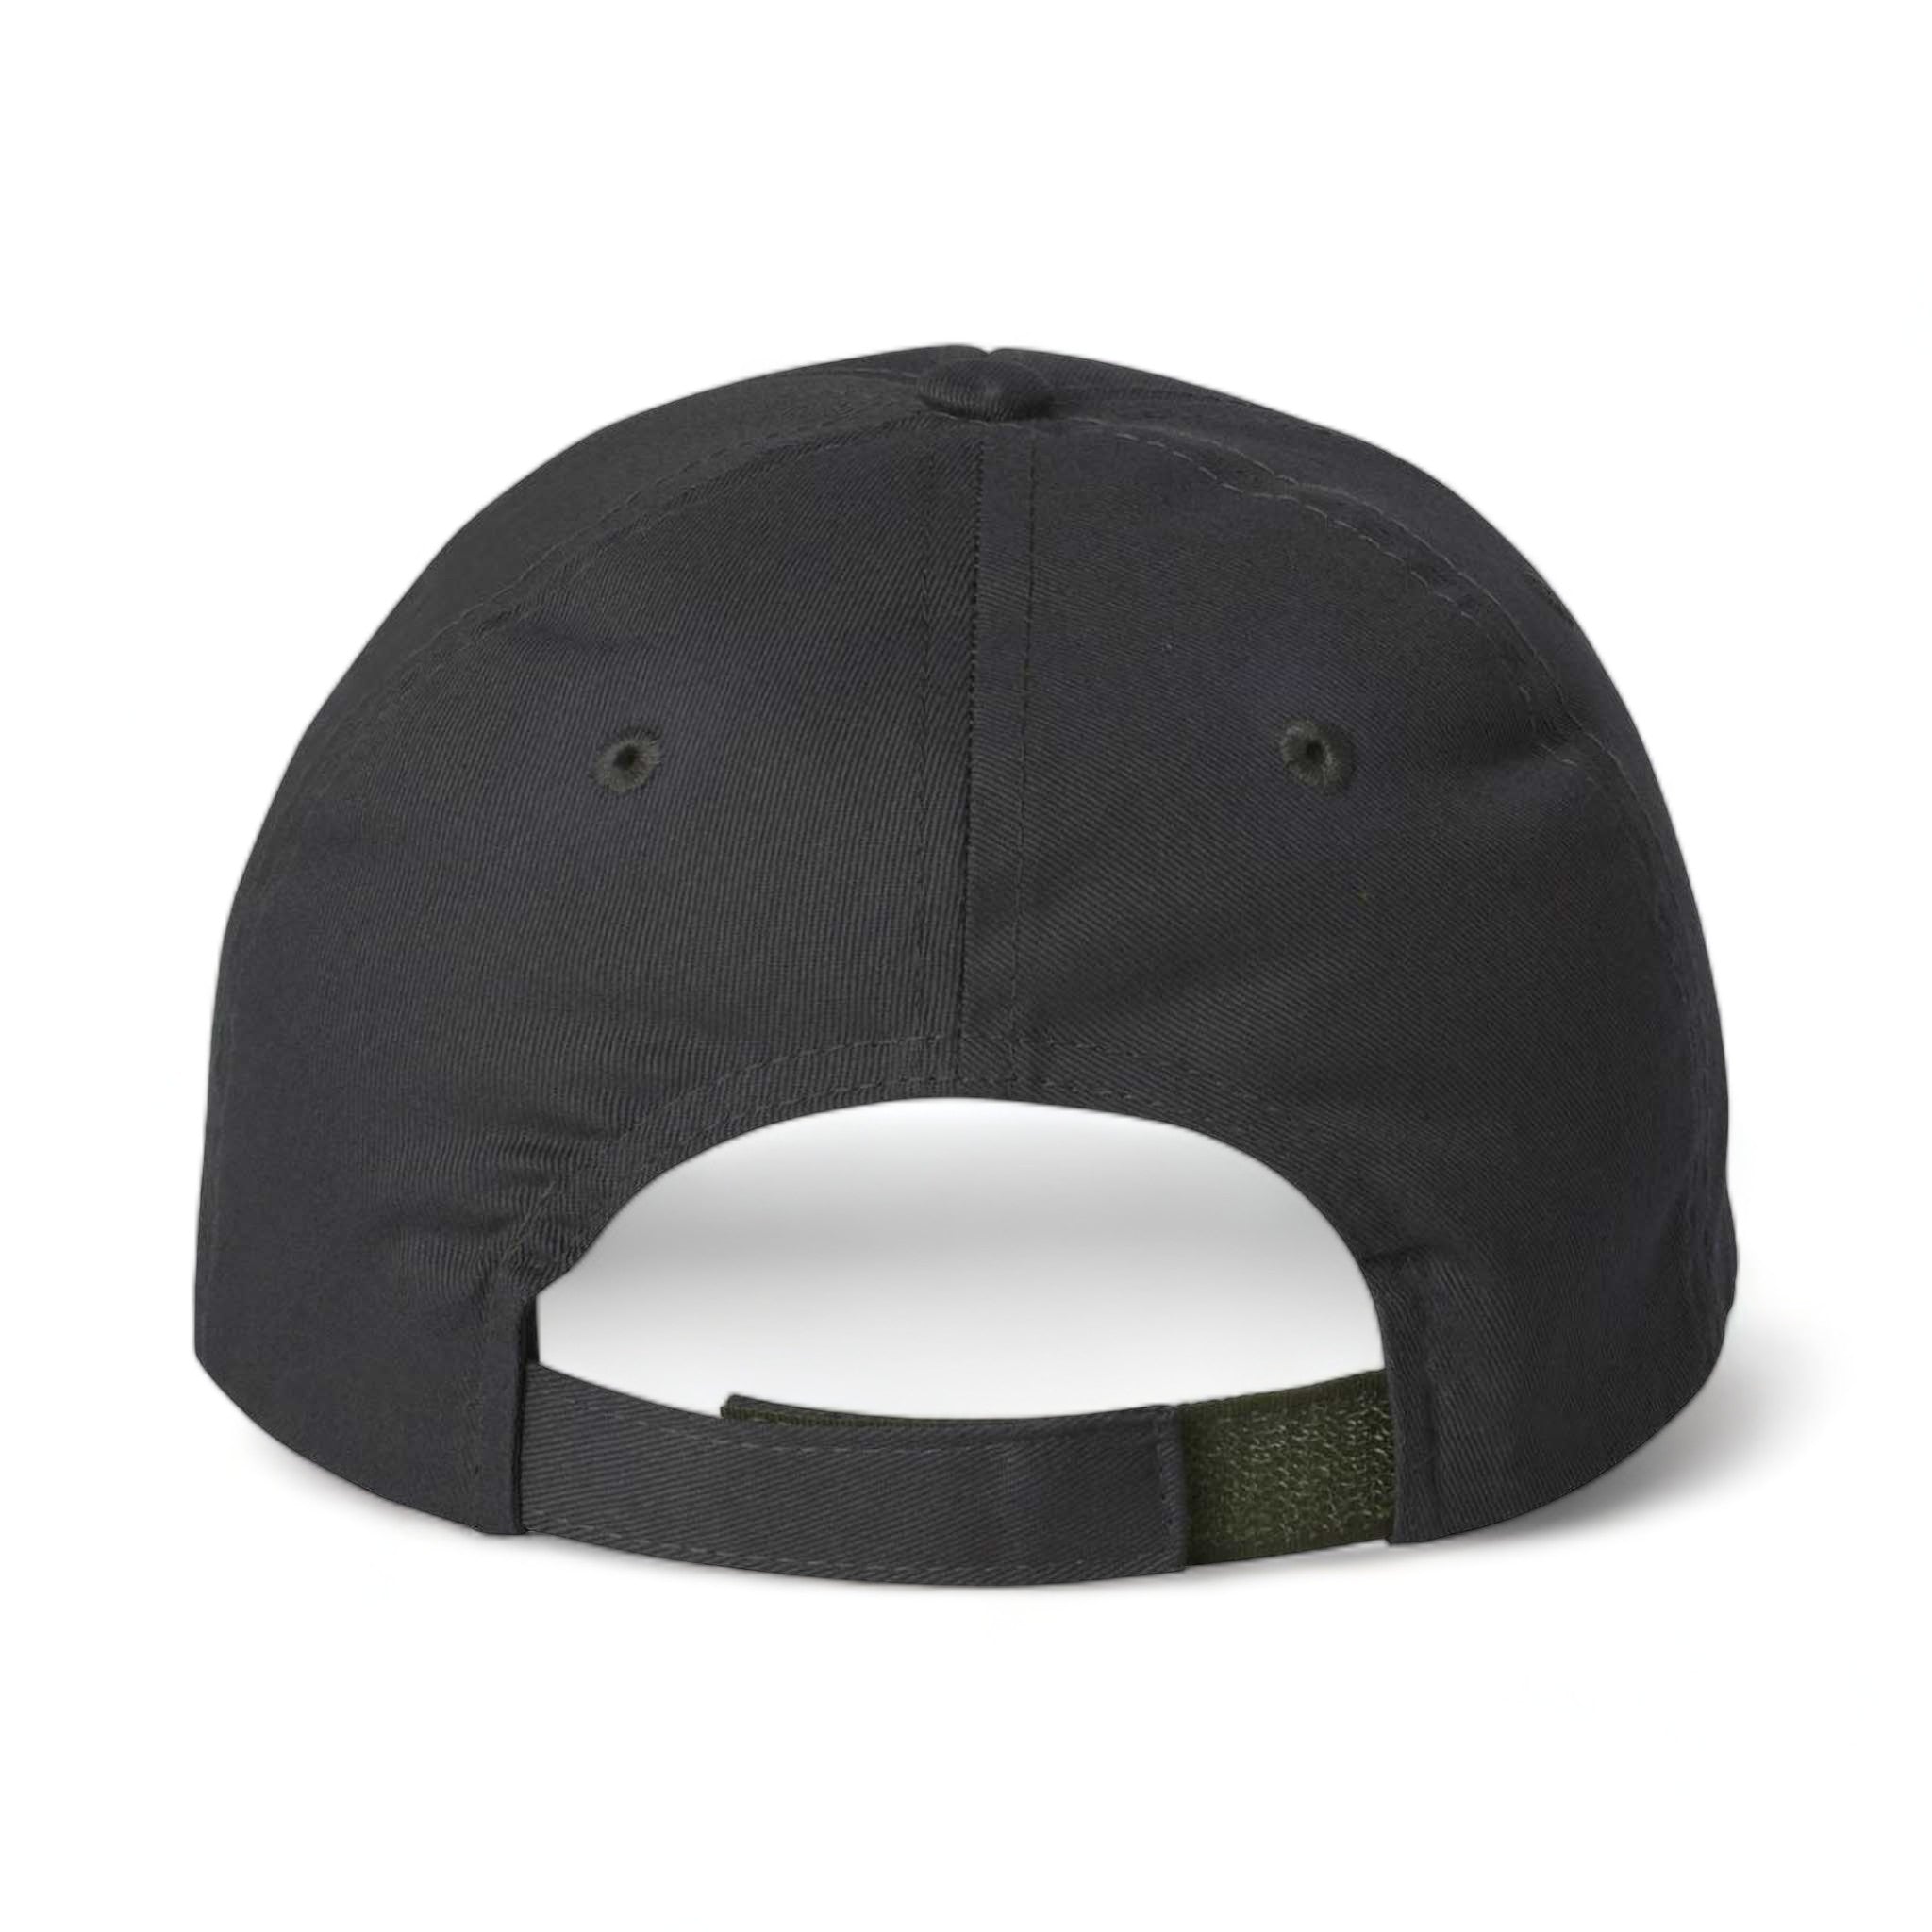 Back view of Sportsman 2260 custom hat in dark grey